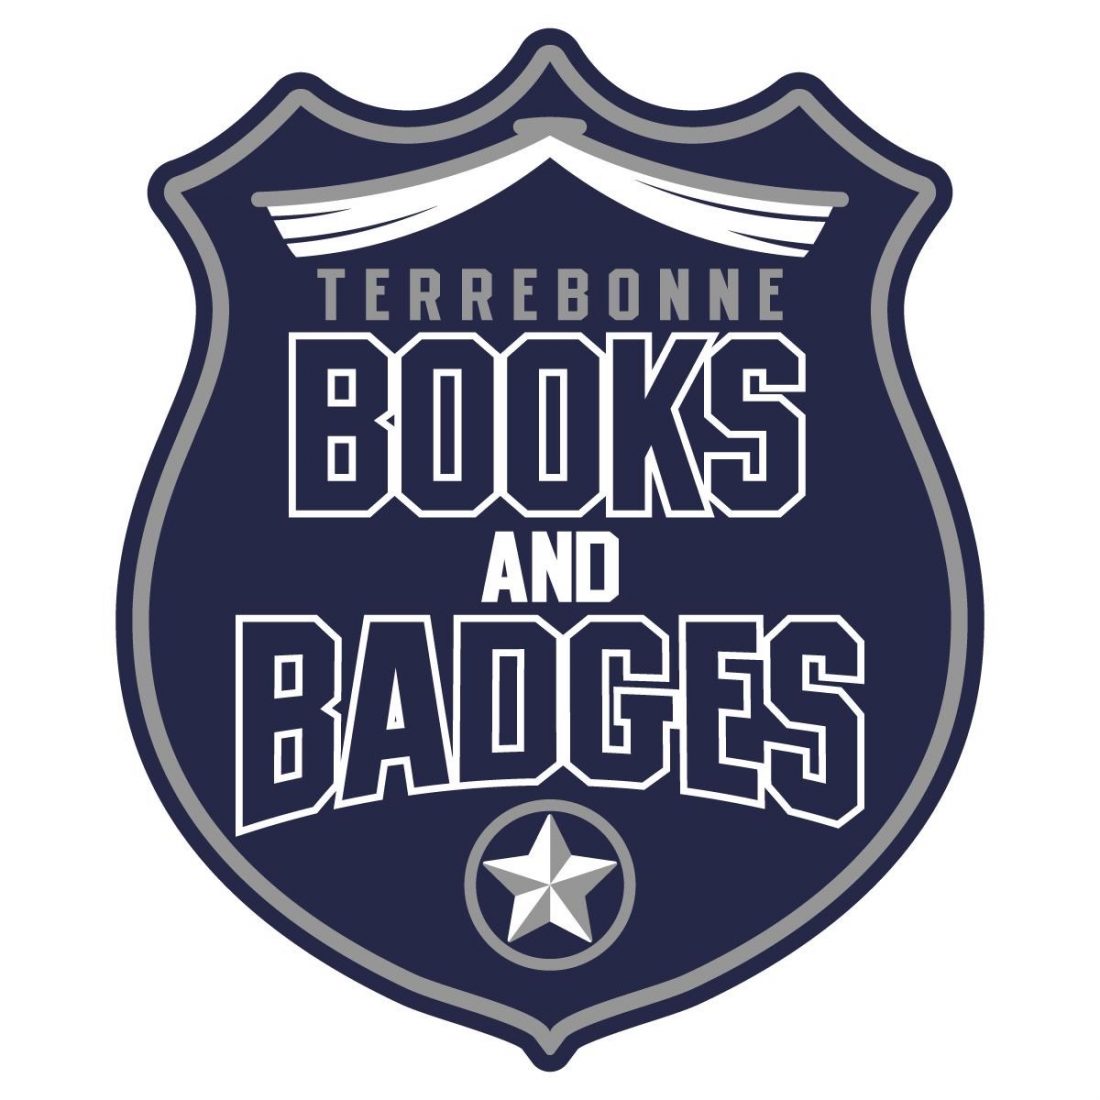 ‘Books & Badges’ Safety Awareness program coming to Terrebonne Schools